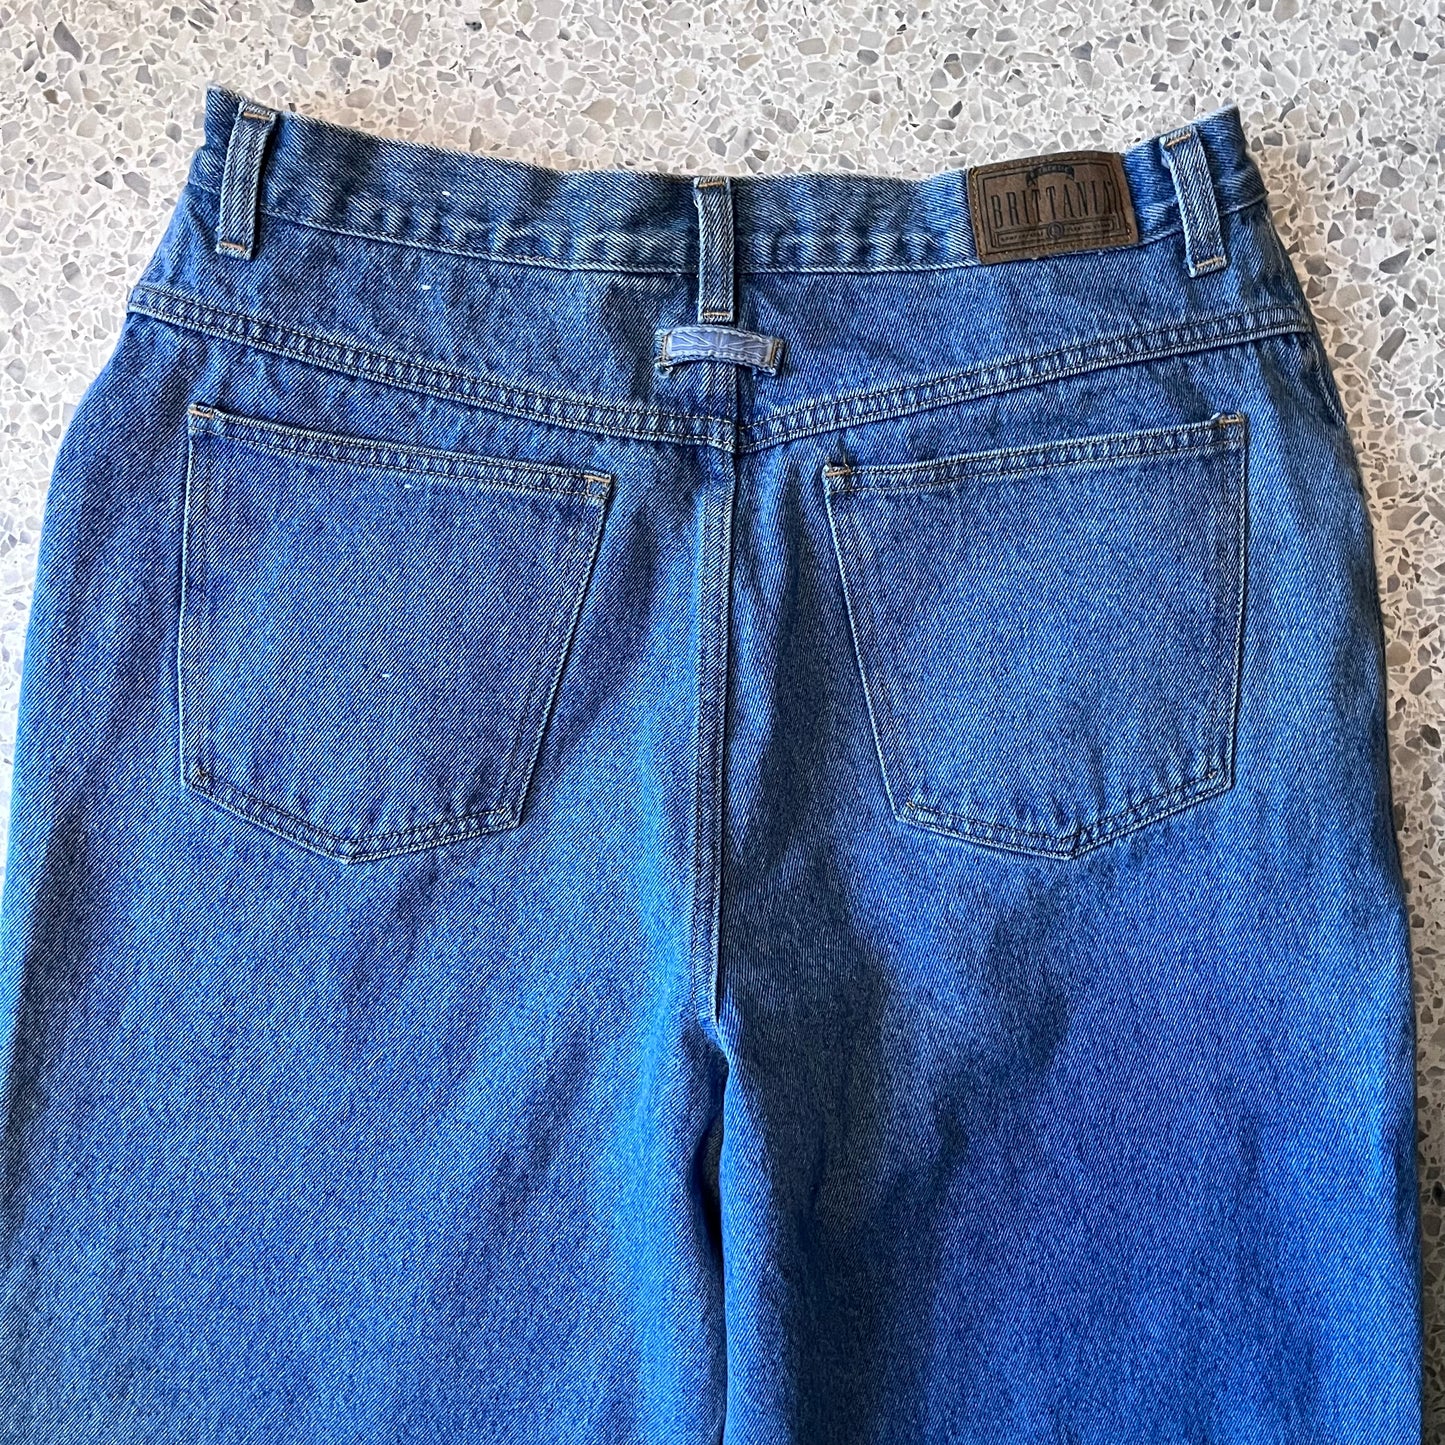 1980s Brittania Denim Jeans